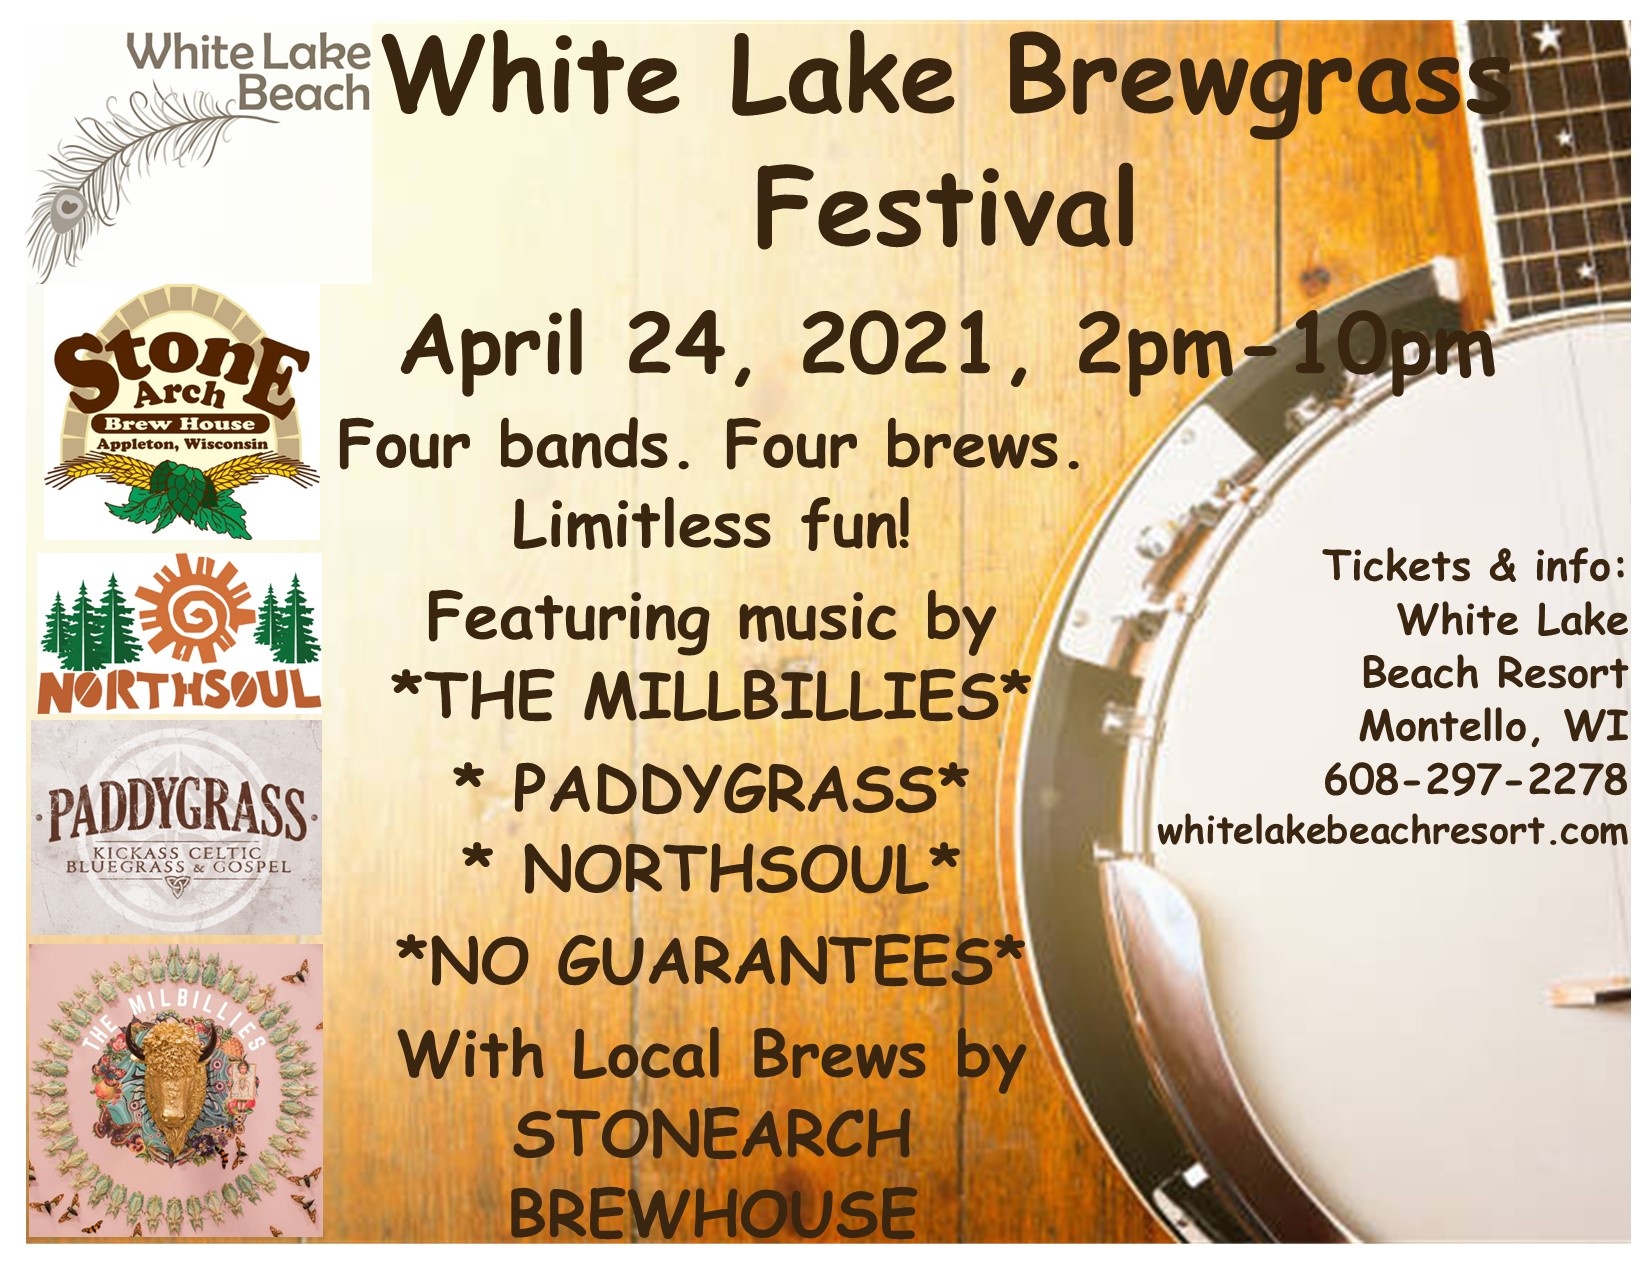 White Lake Brewgrass Festival Bluegrass Today